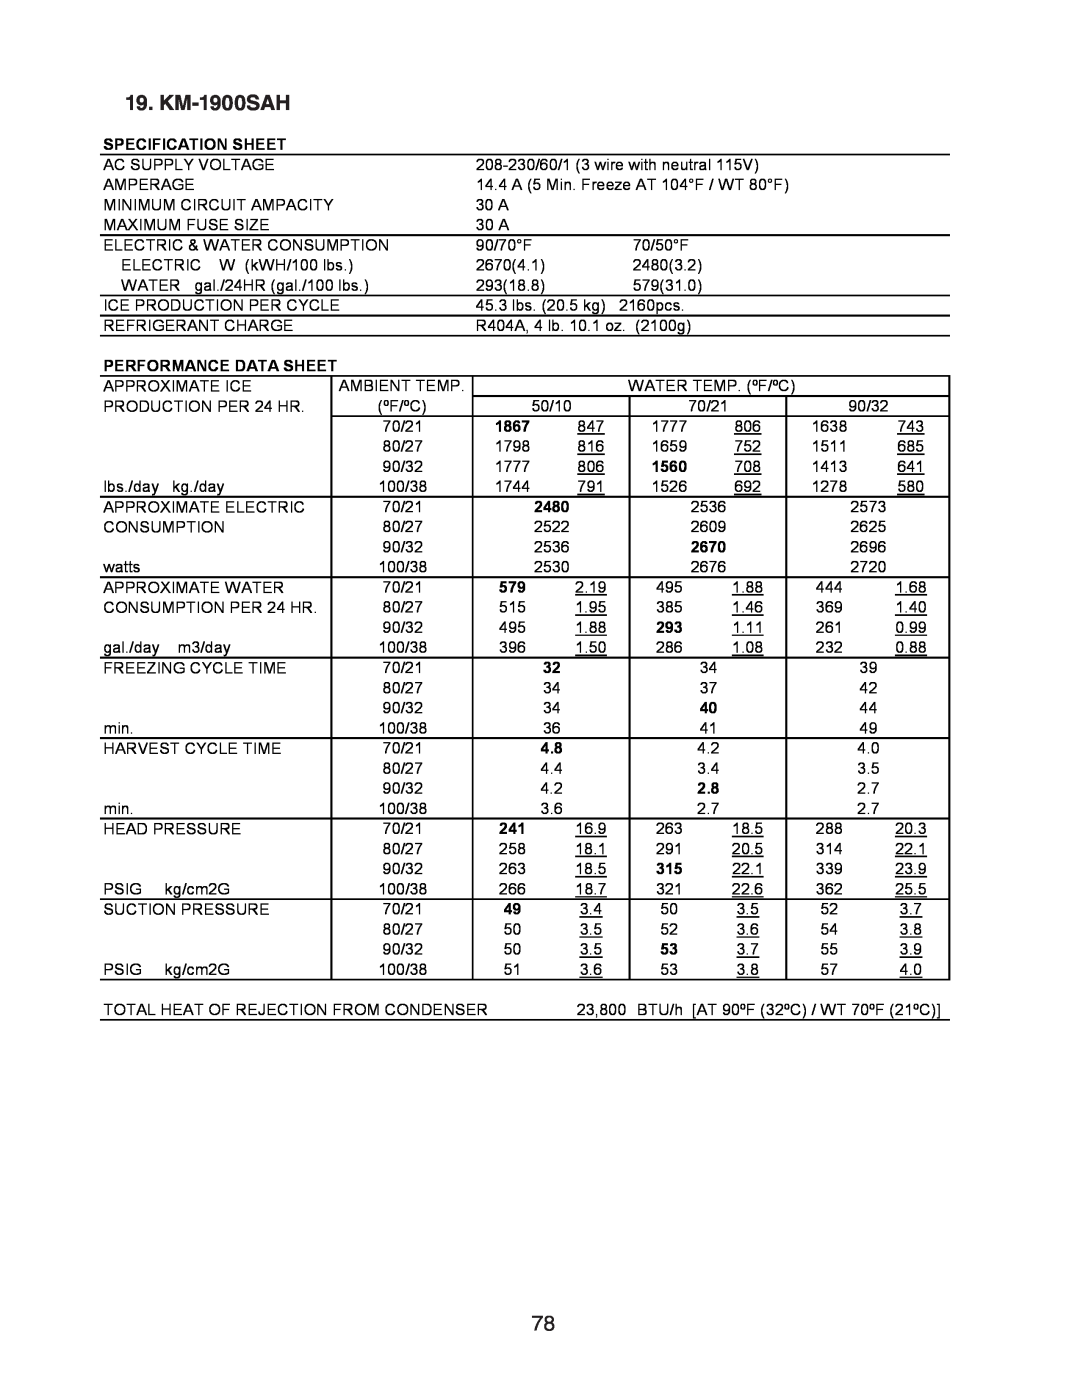 Hoshizaki SRH3 KMH-2000SWH/3, SRH/3 KM-2100SWH3 KM-1900SAH, Specification Sheet, Performance Data Sheet, 2480 